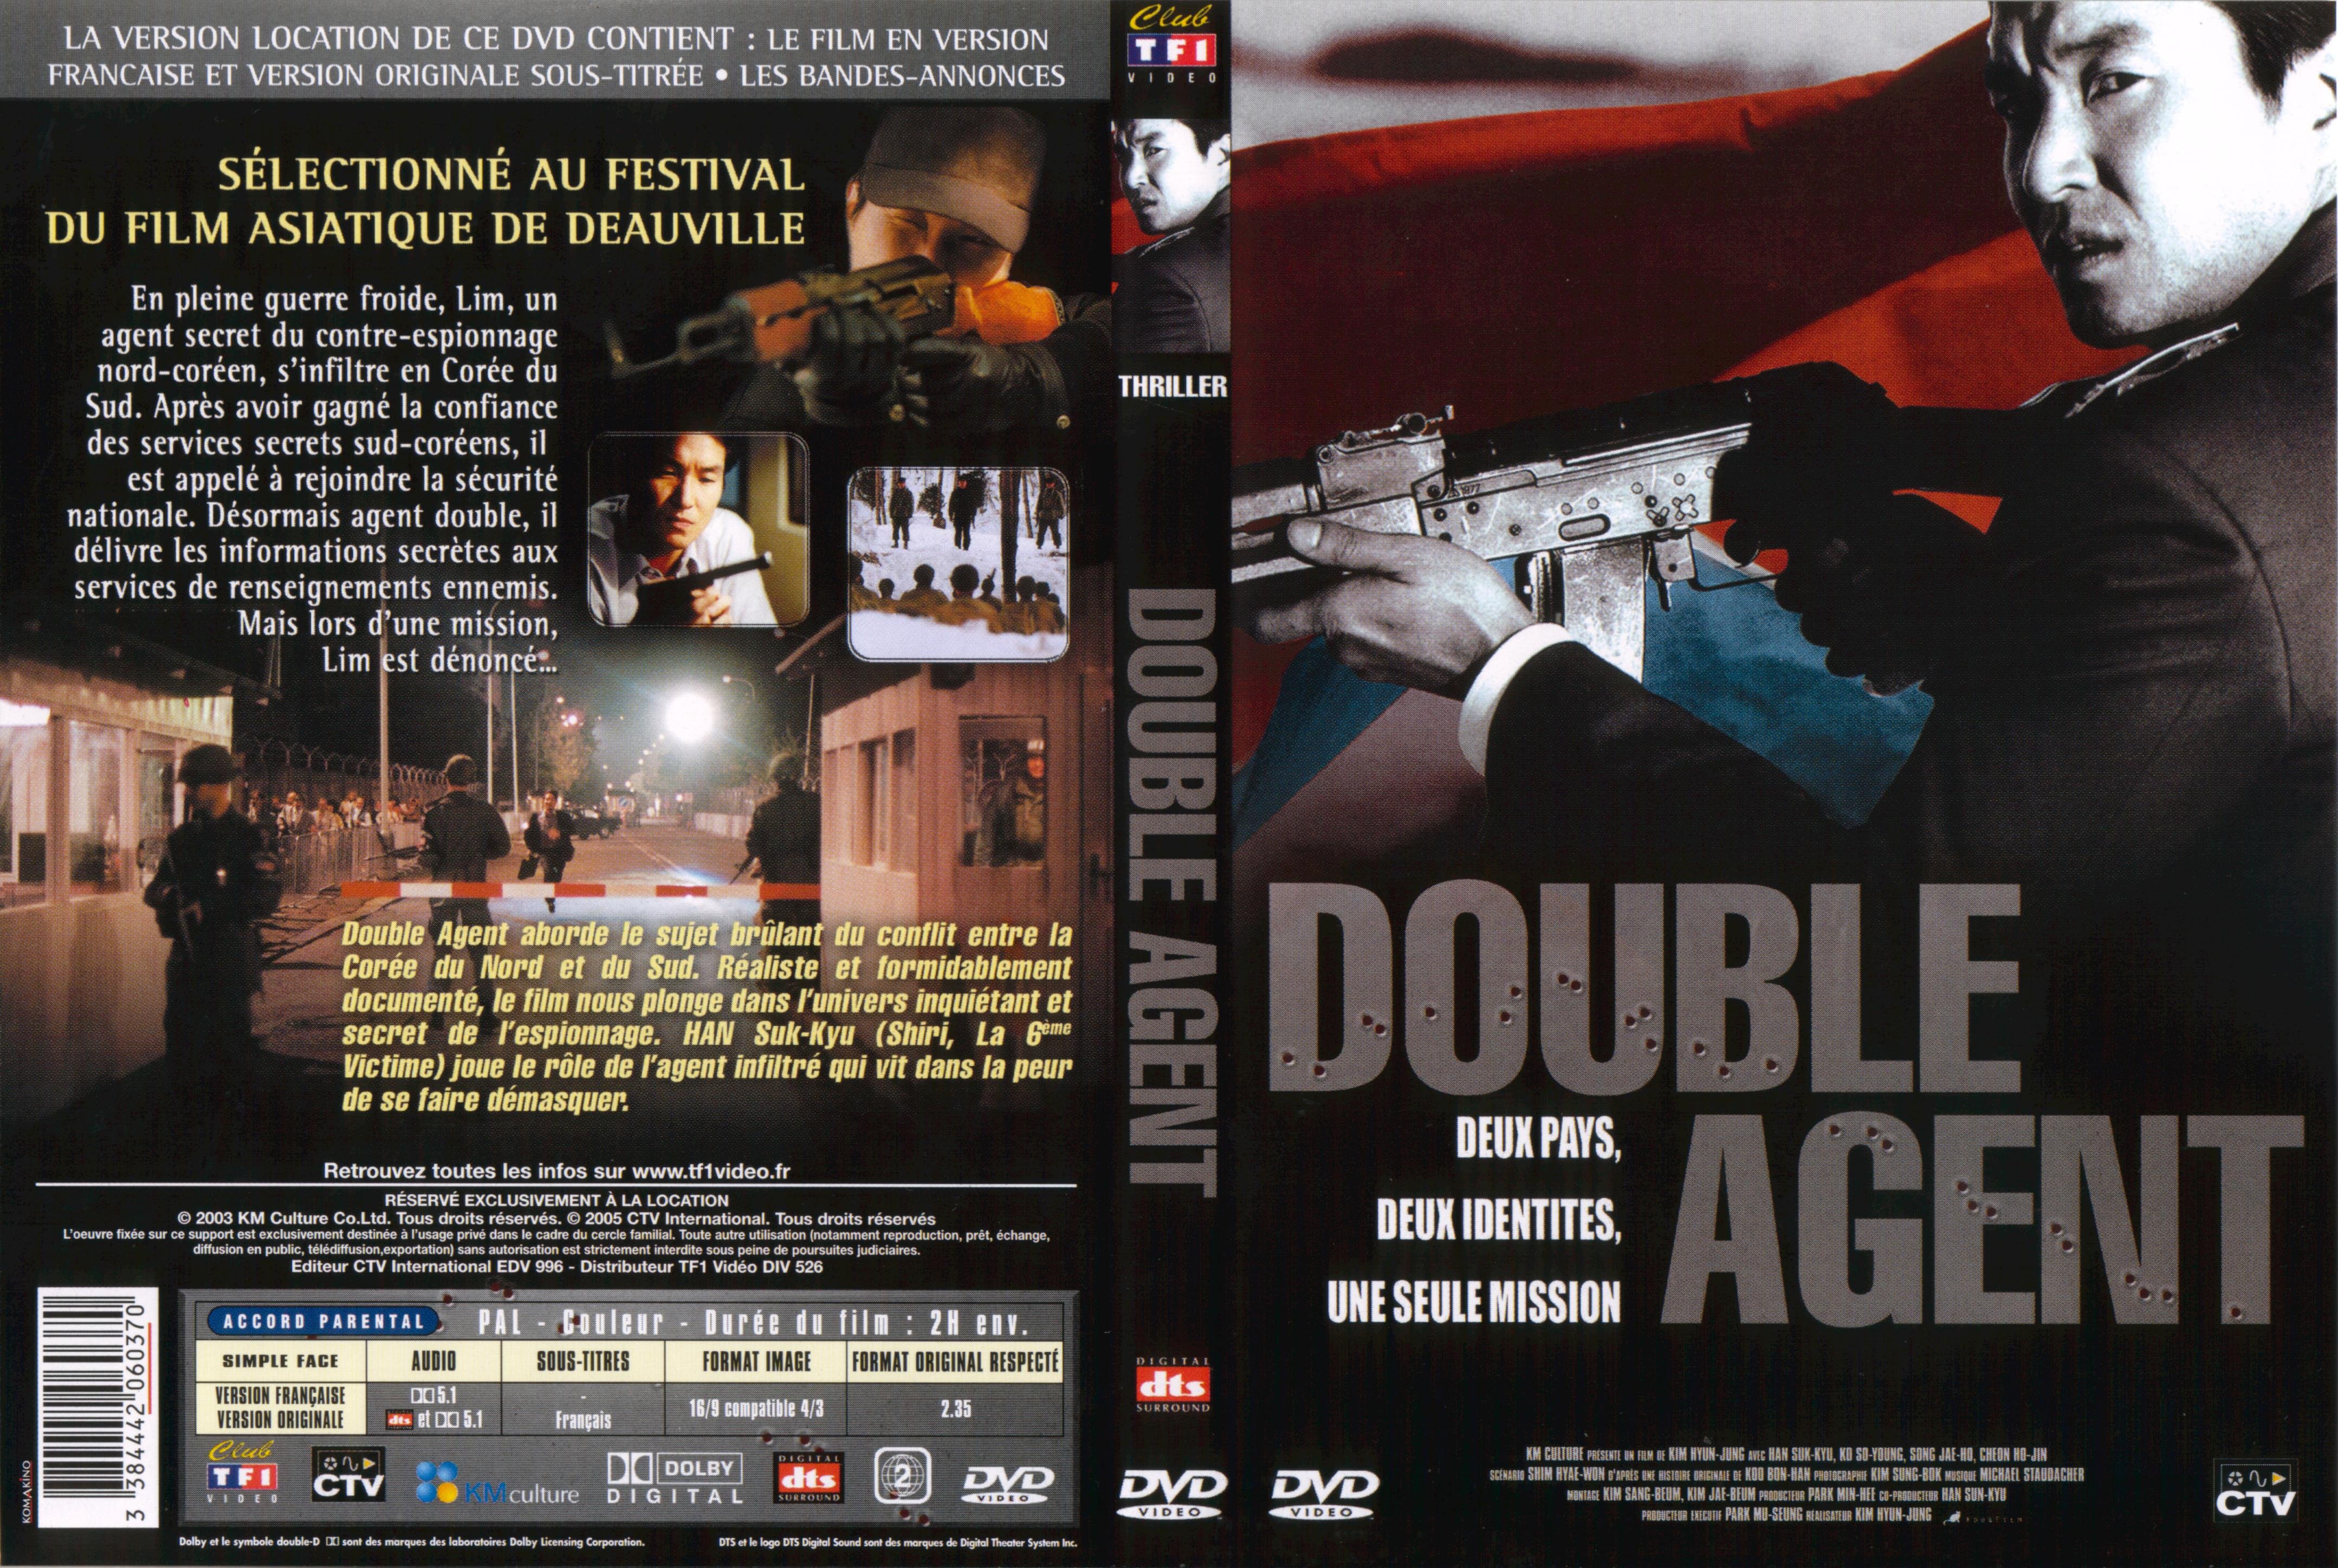 Jaquette DVD Double agent v2